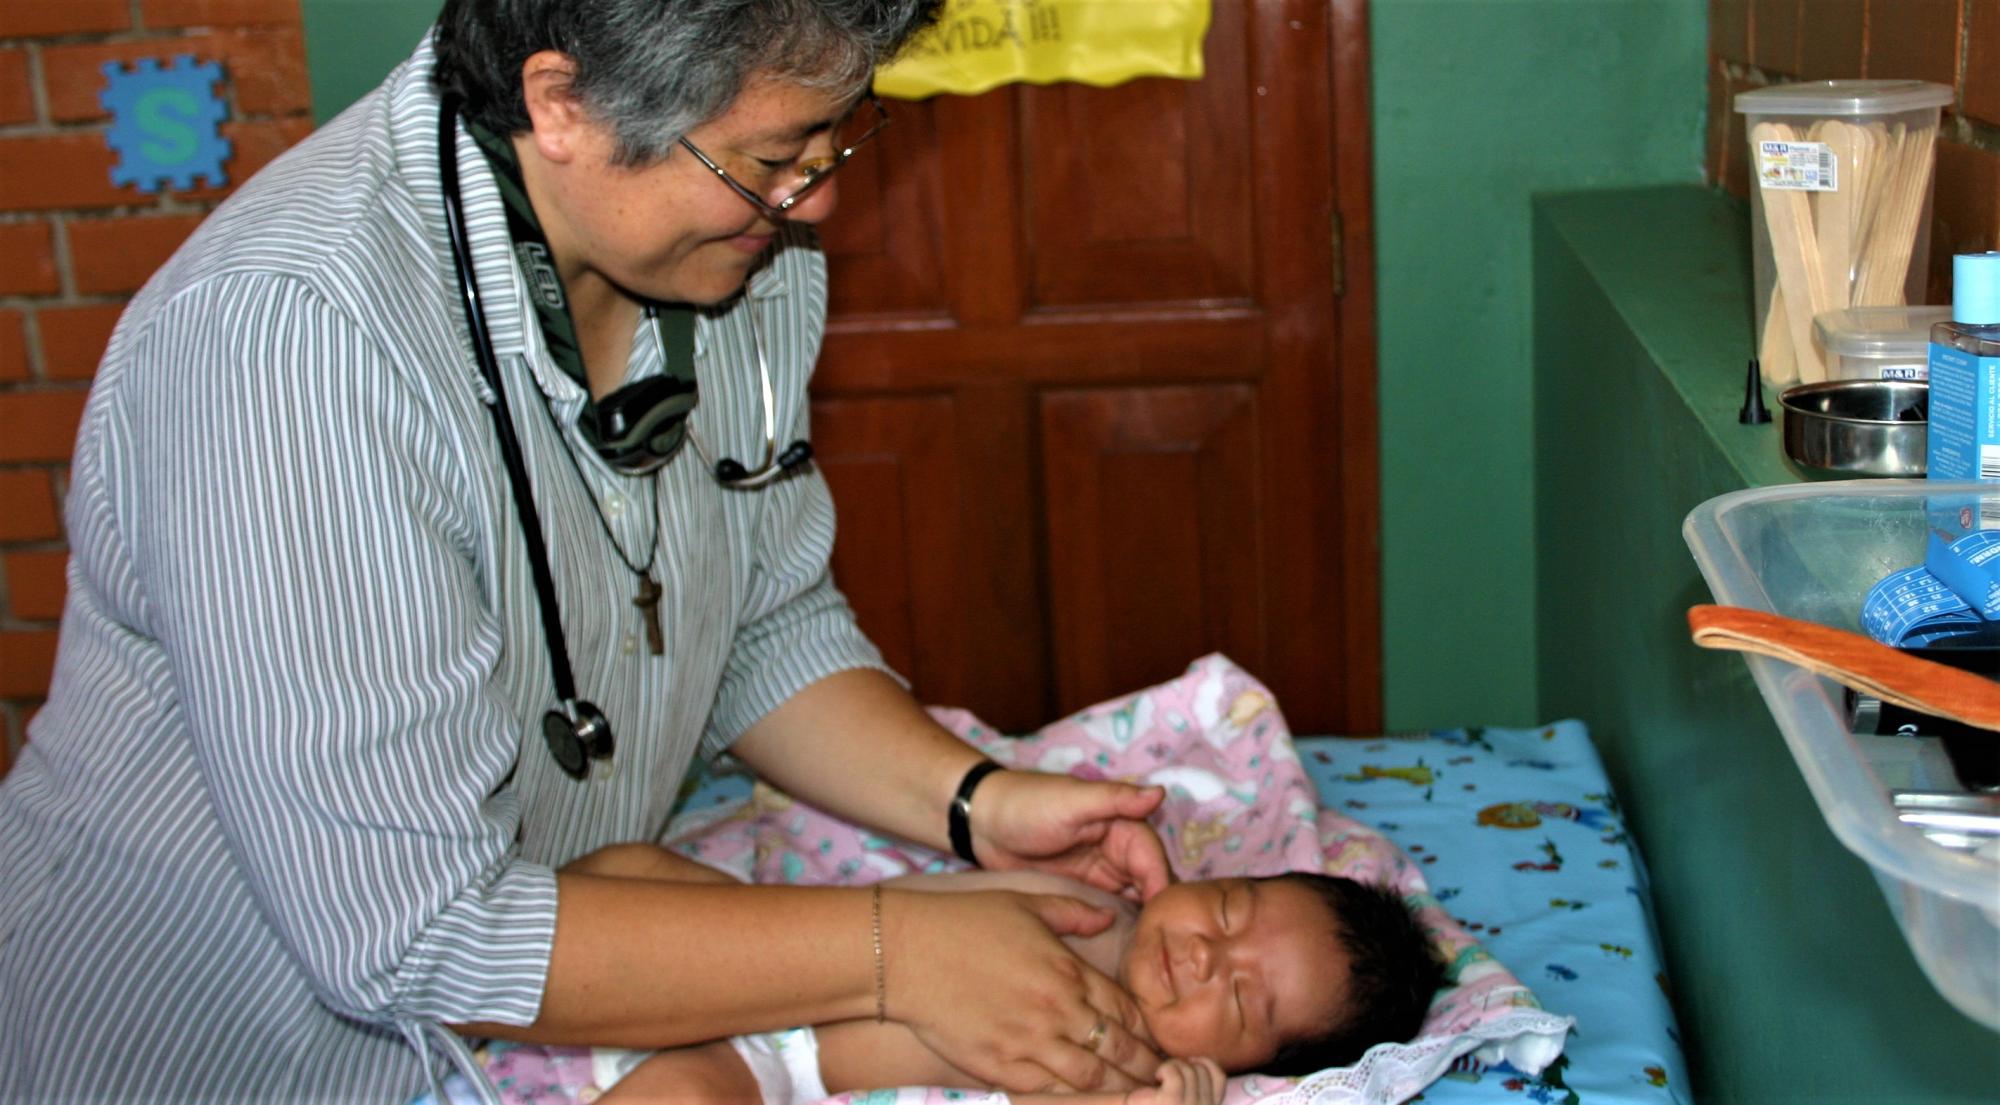 Sister Mafe, a paediatrician, treats a baby